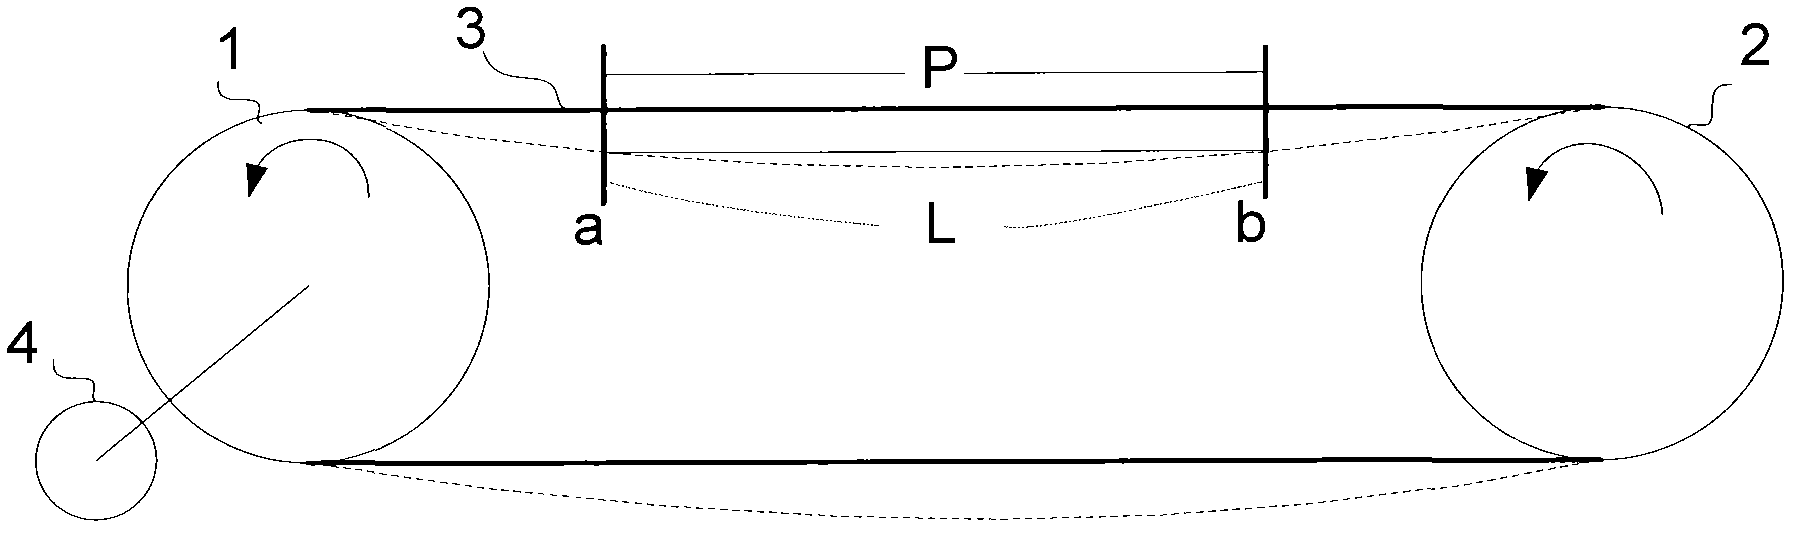 System and method for measuring looseness of transmission belt